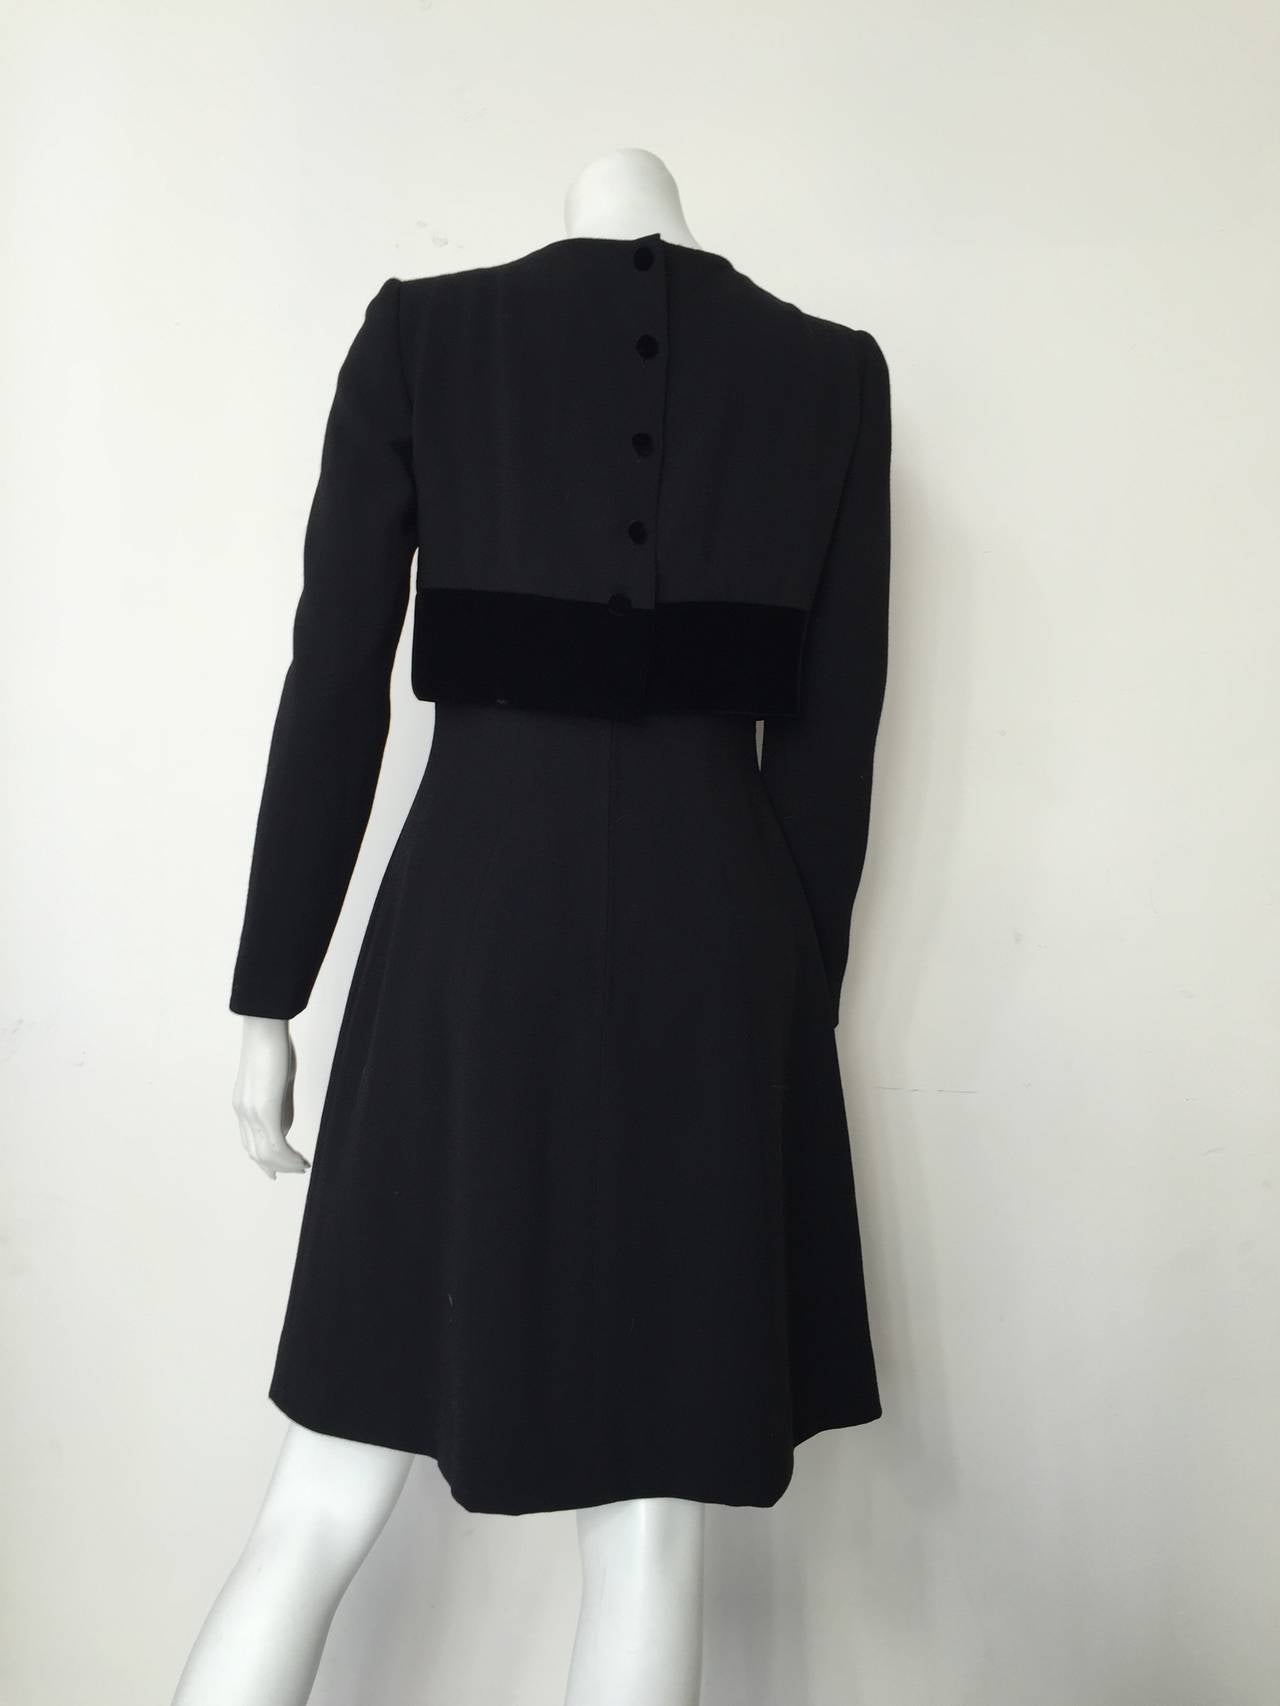 Oscar de la Renta 90s black dress size 6. For Sale at 1stDibs